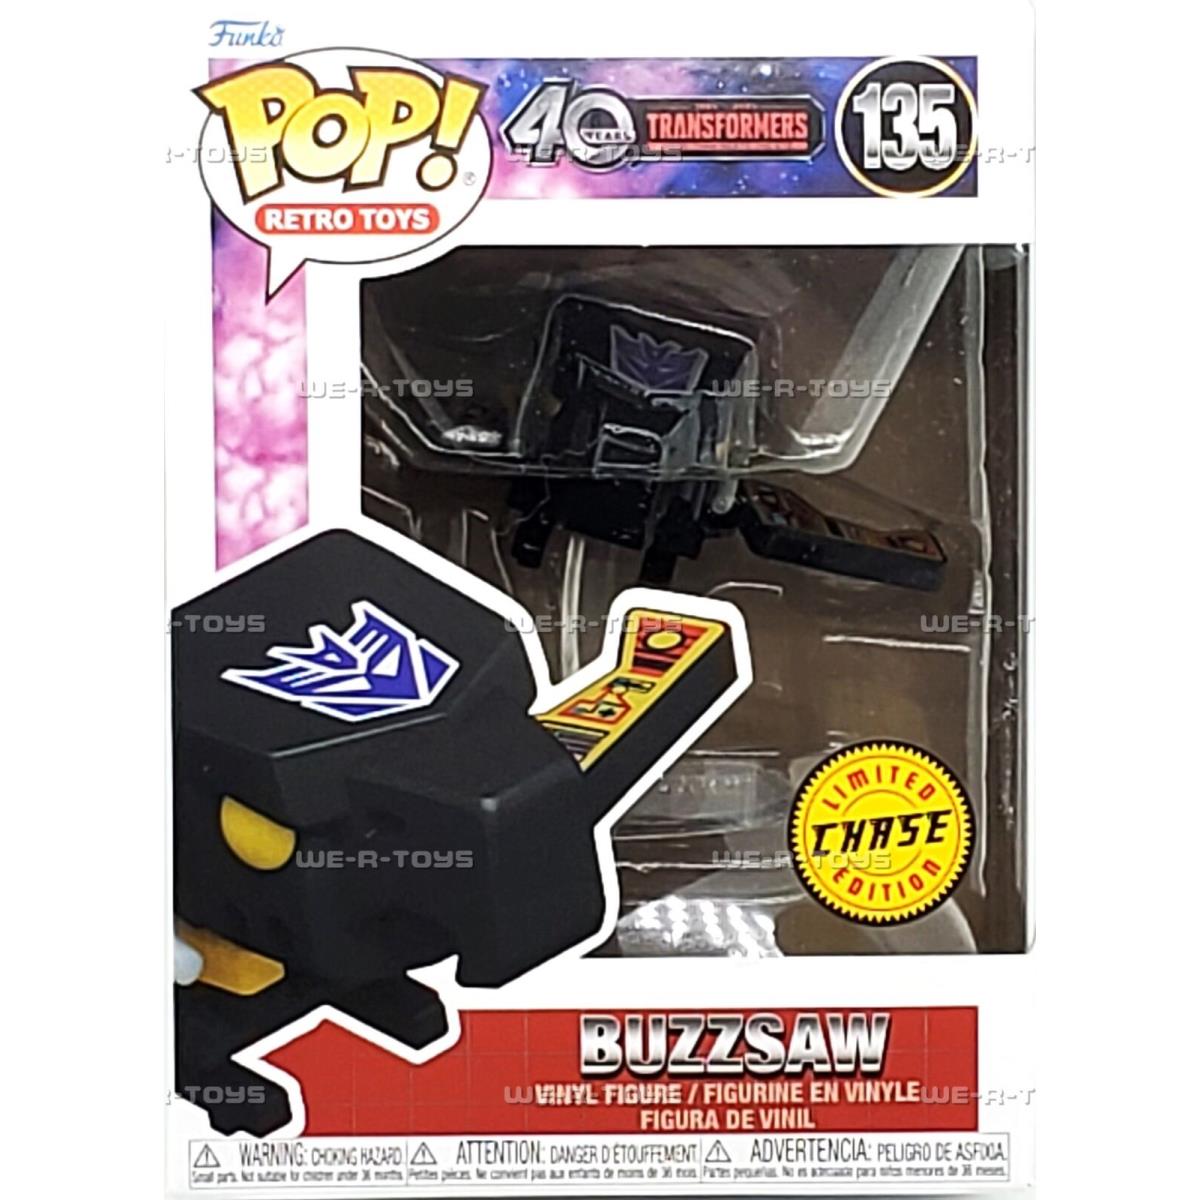 Funko Pop Retro Toys 135 Transformers Limited Edition Chase Buzzsaw Vinyl Figure